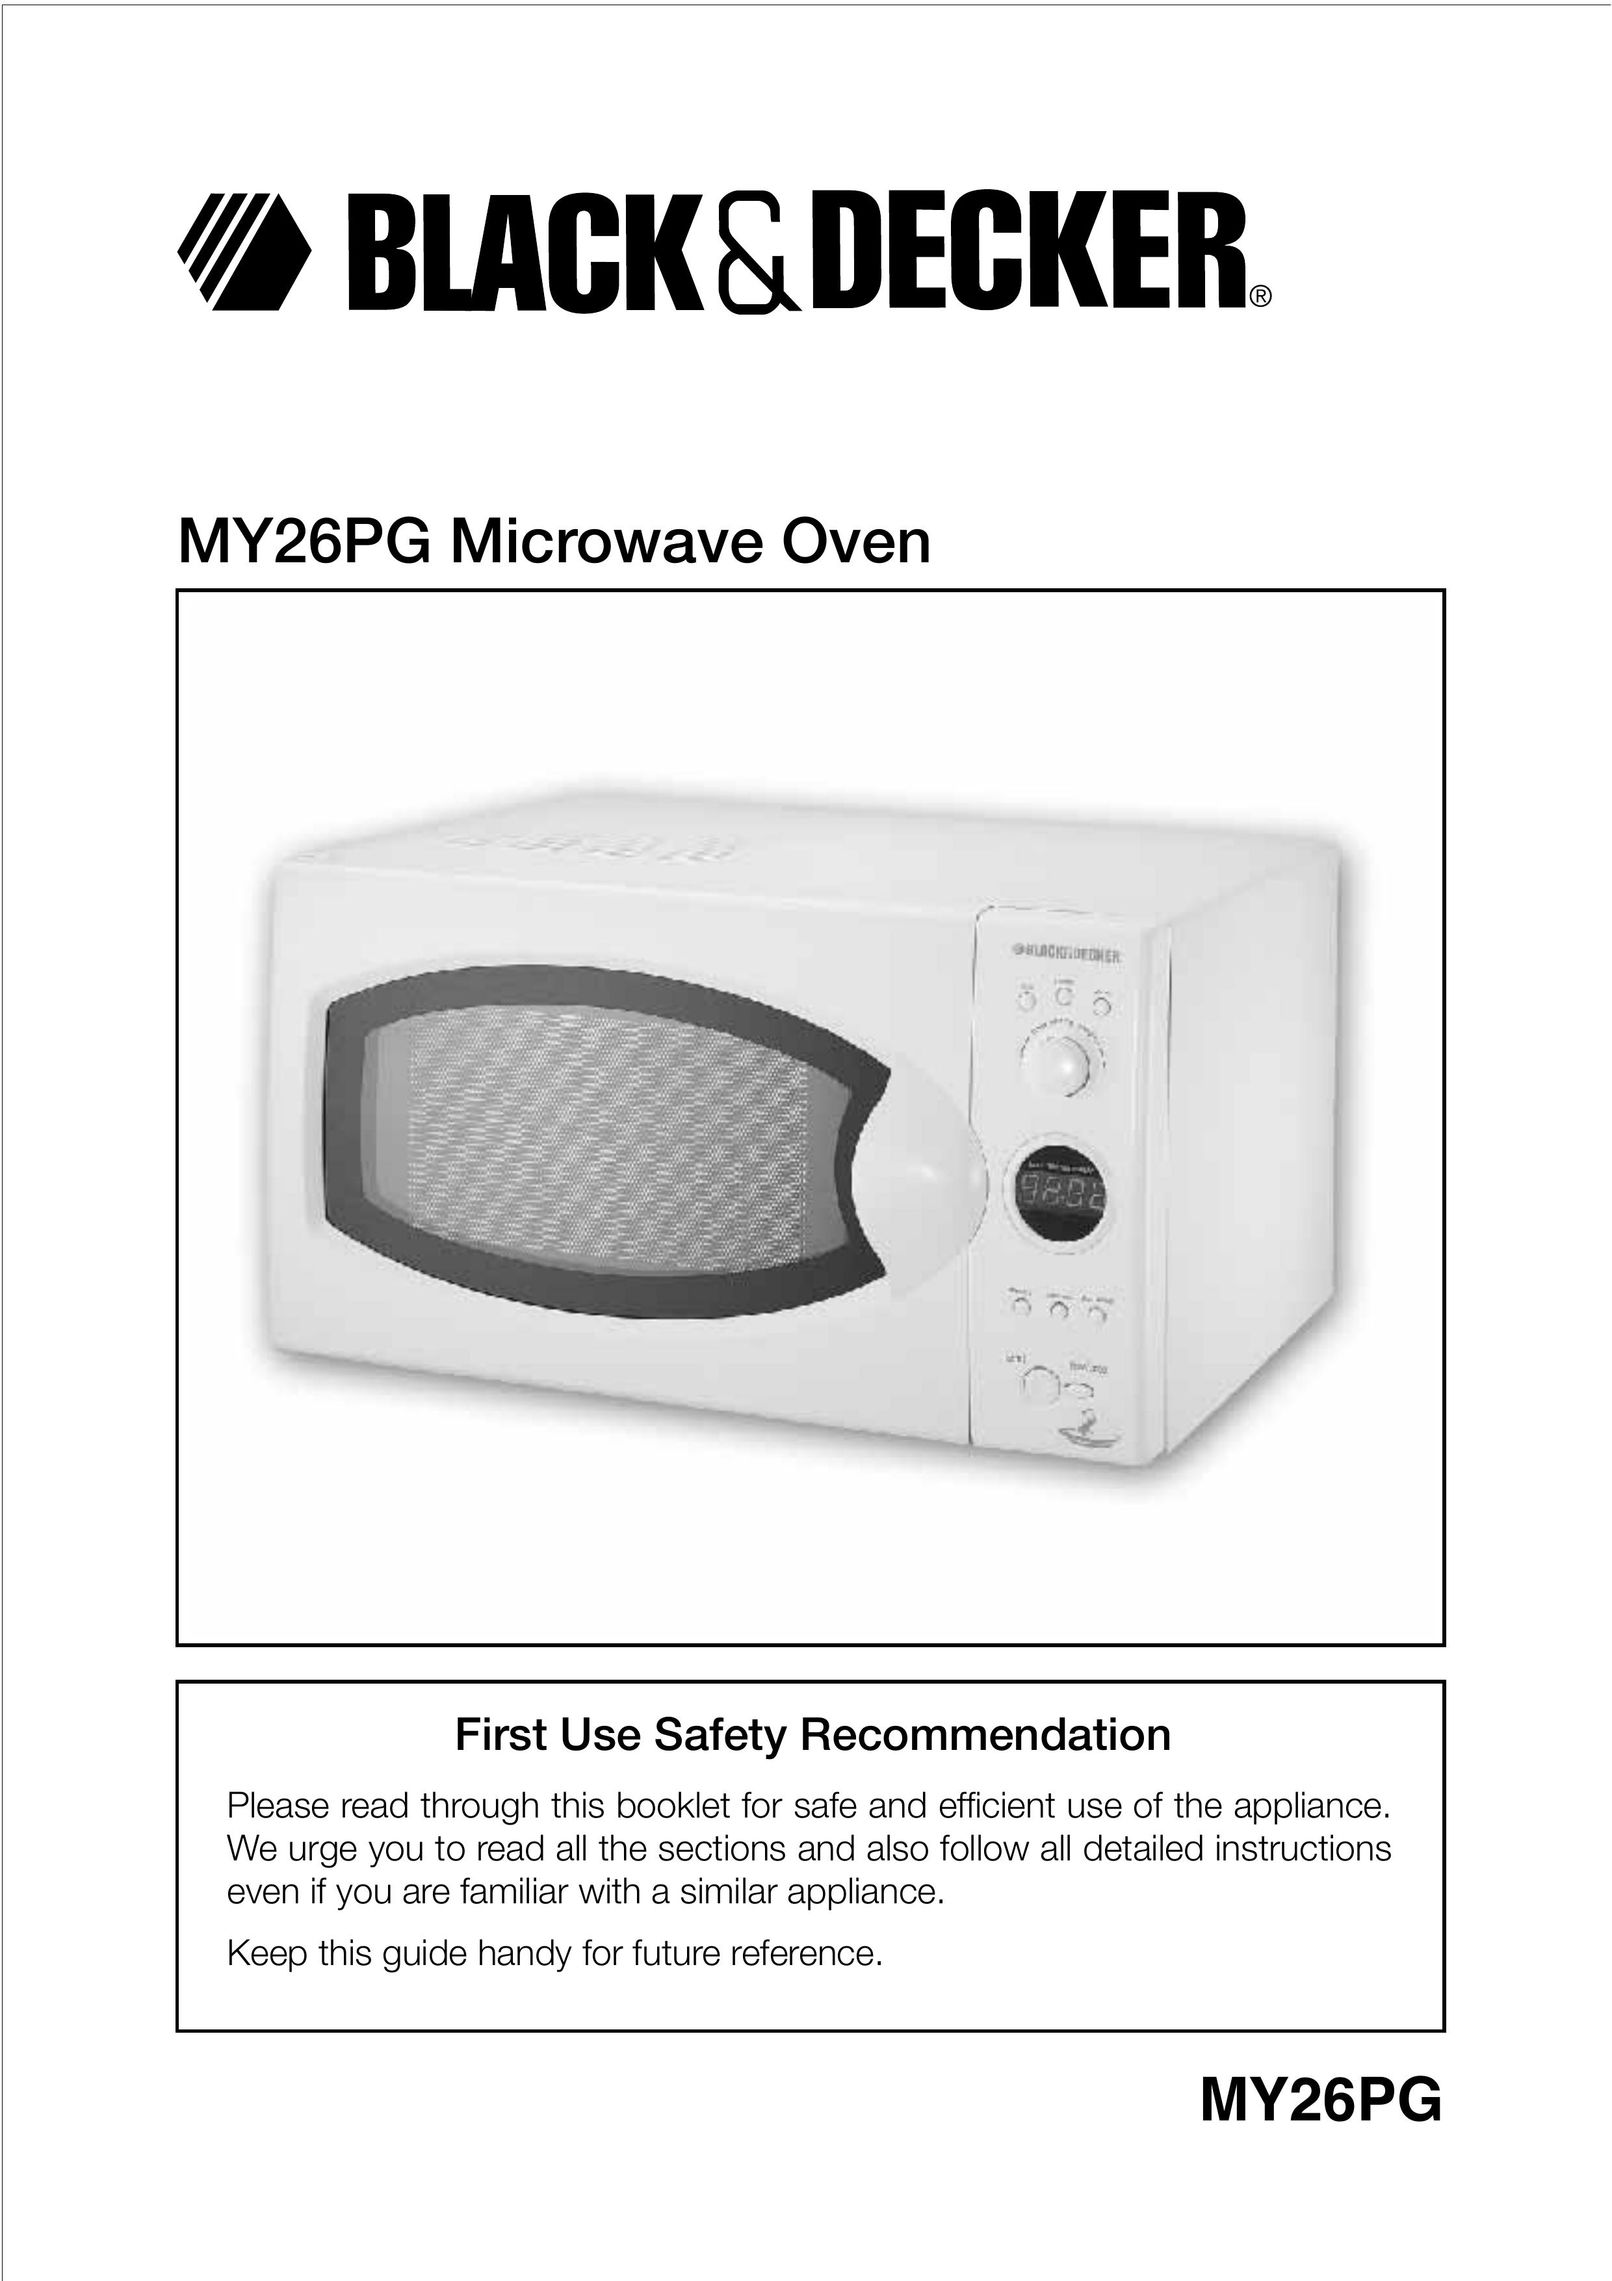 Black & Decker MY26PG Microwave Oven User Manual